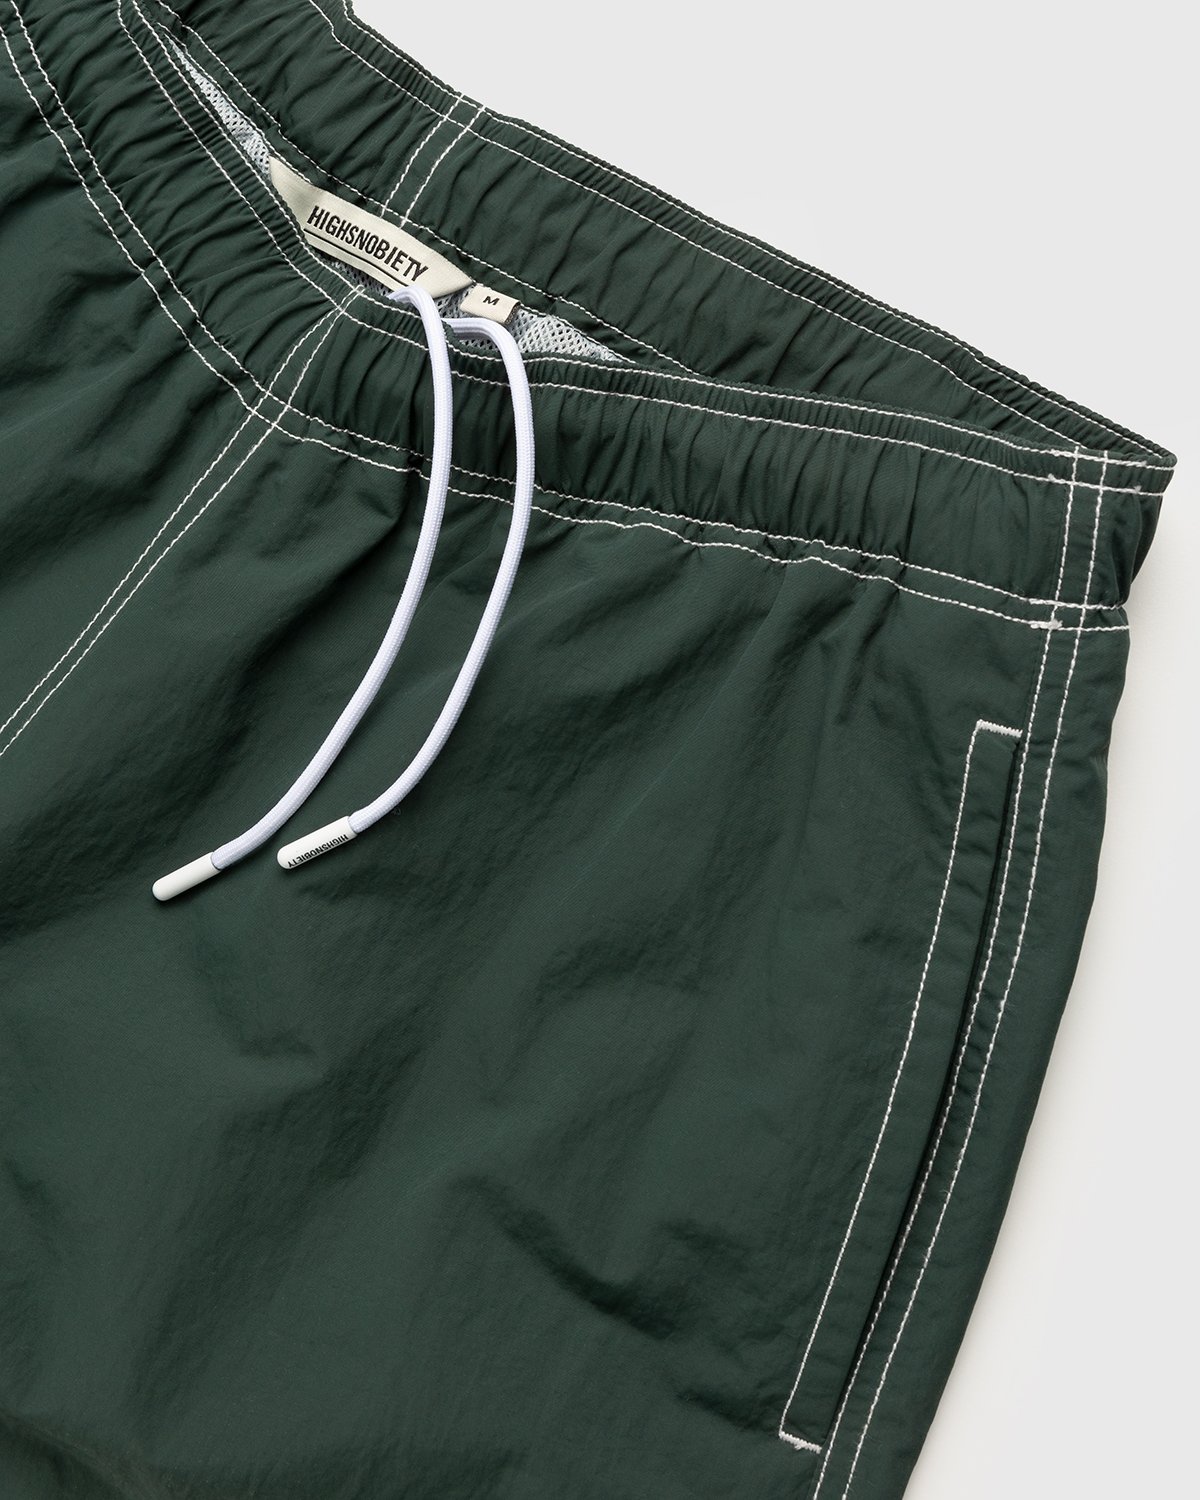 Highsnobiety - Contrast Brushed Nylon Water Shorts Green - Clothing - Green - Image 5